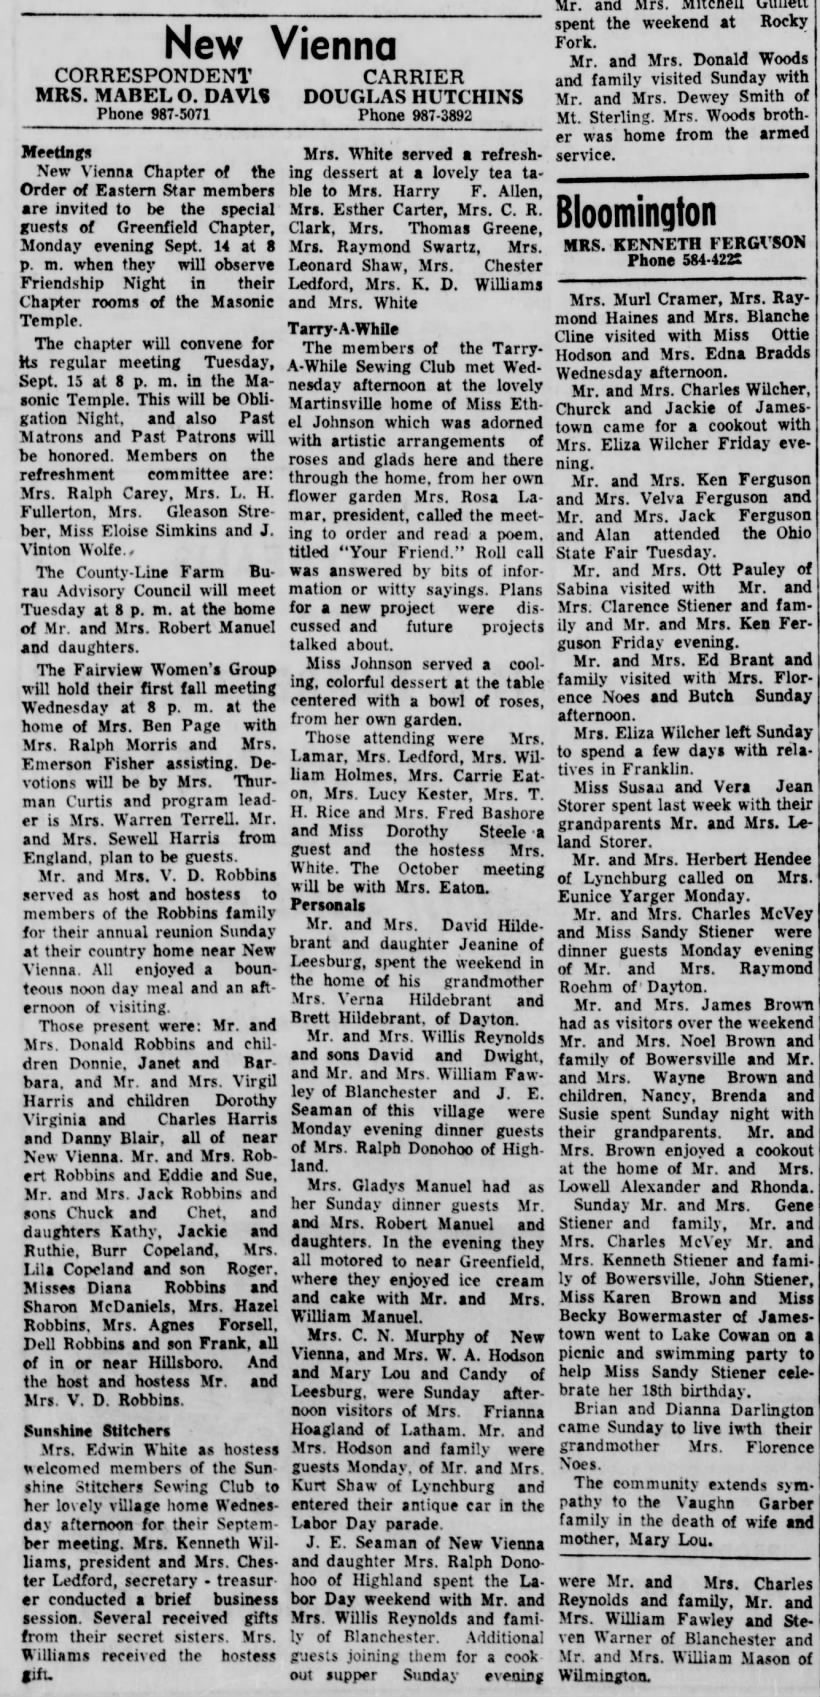 1964 New Vienna News - Sept.12